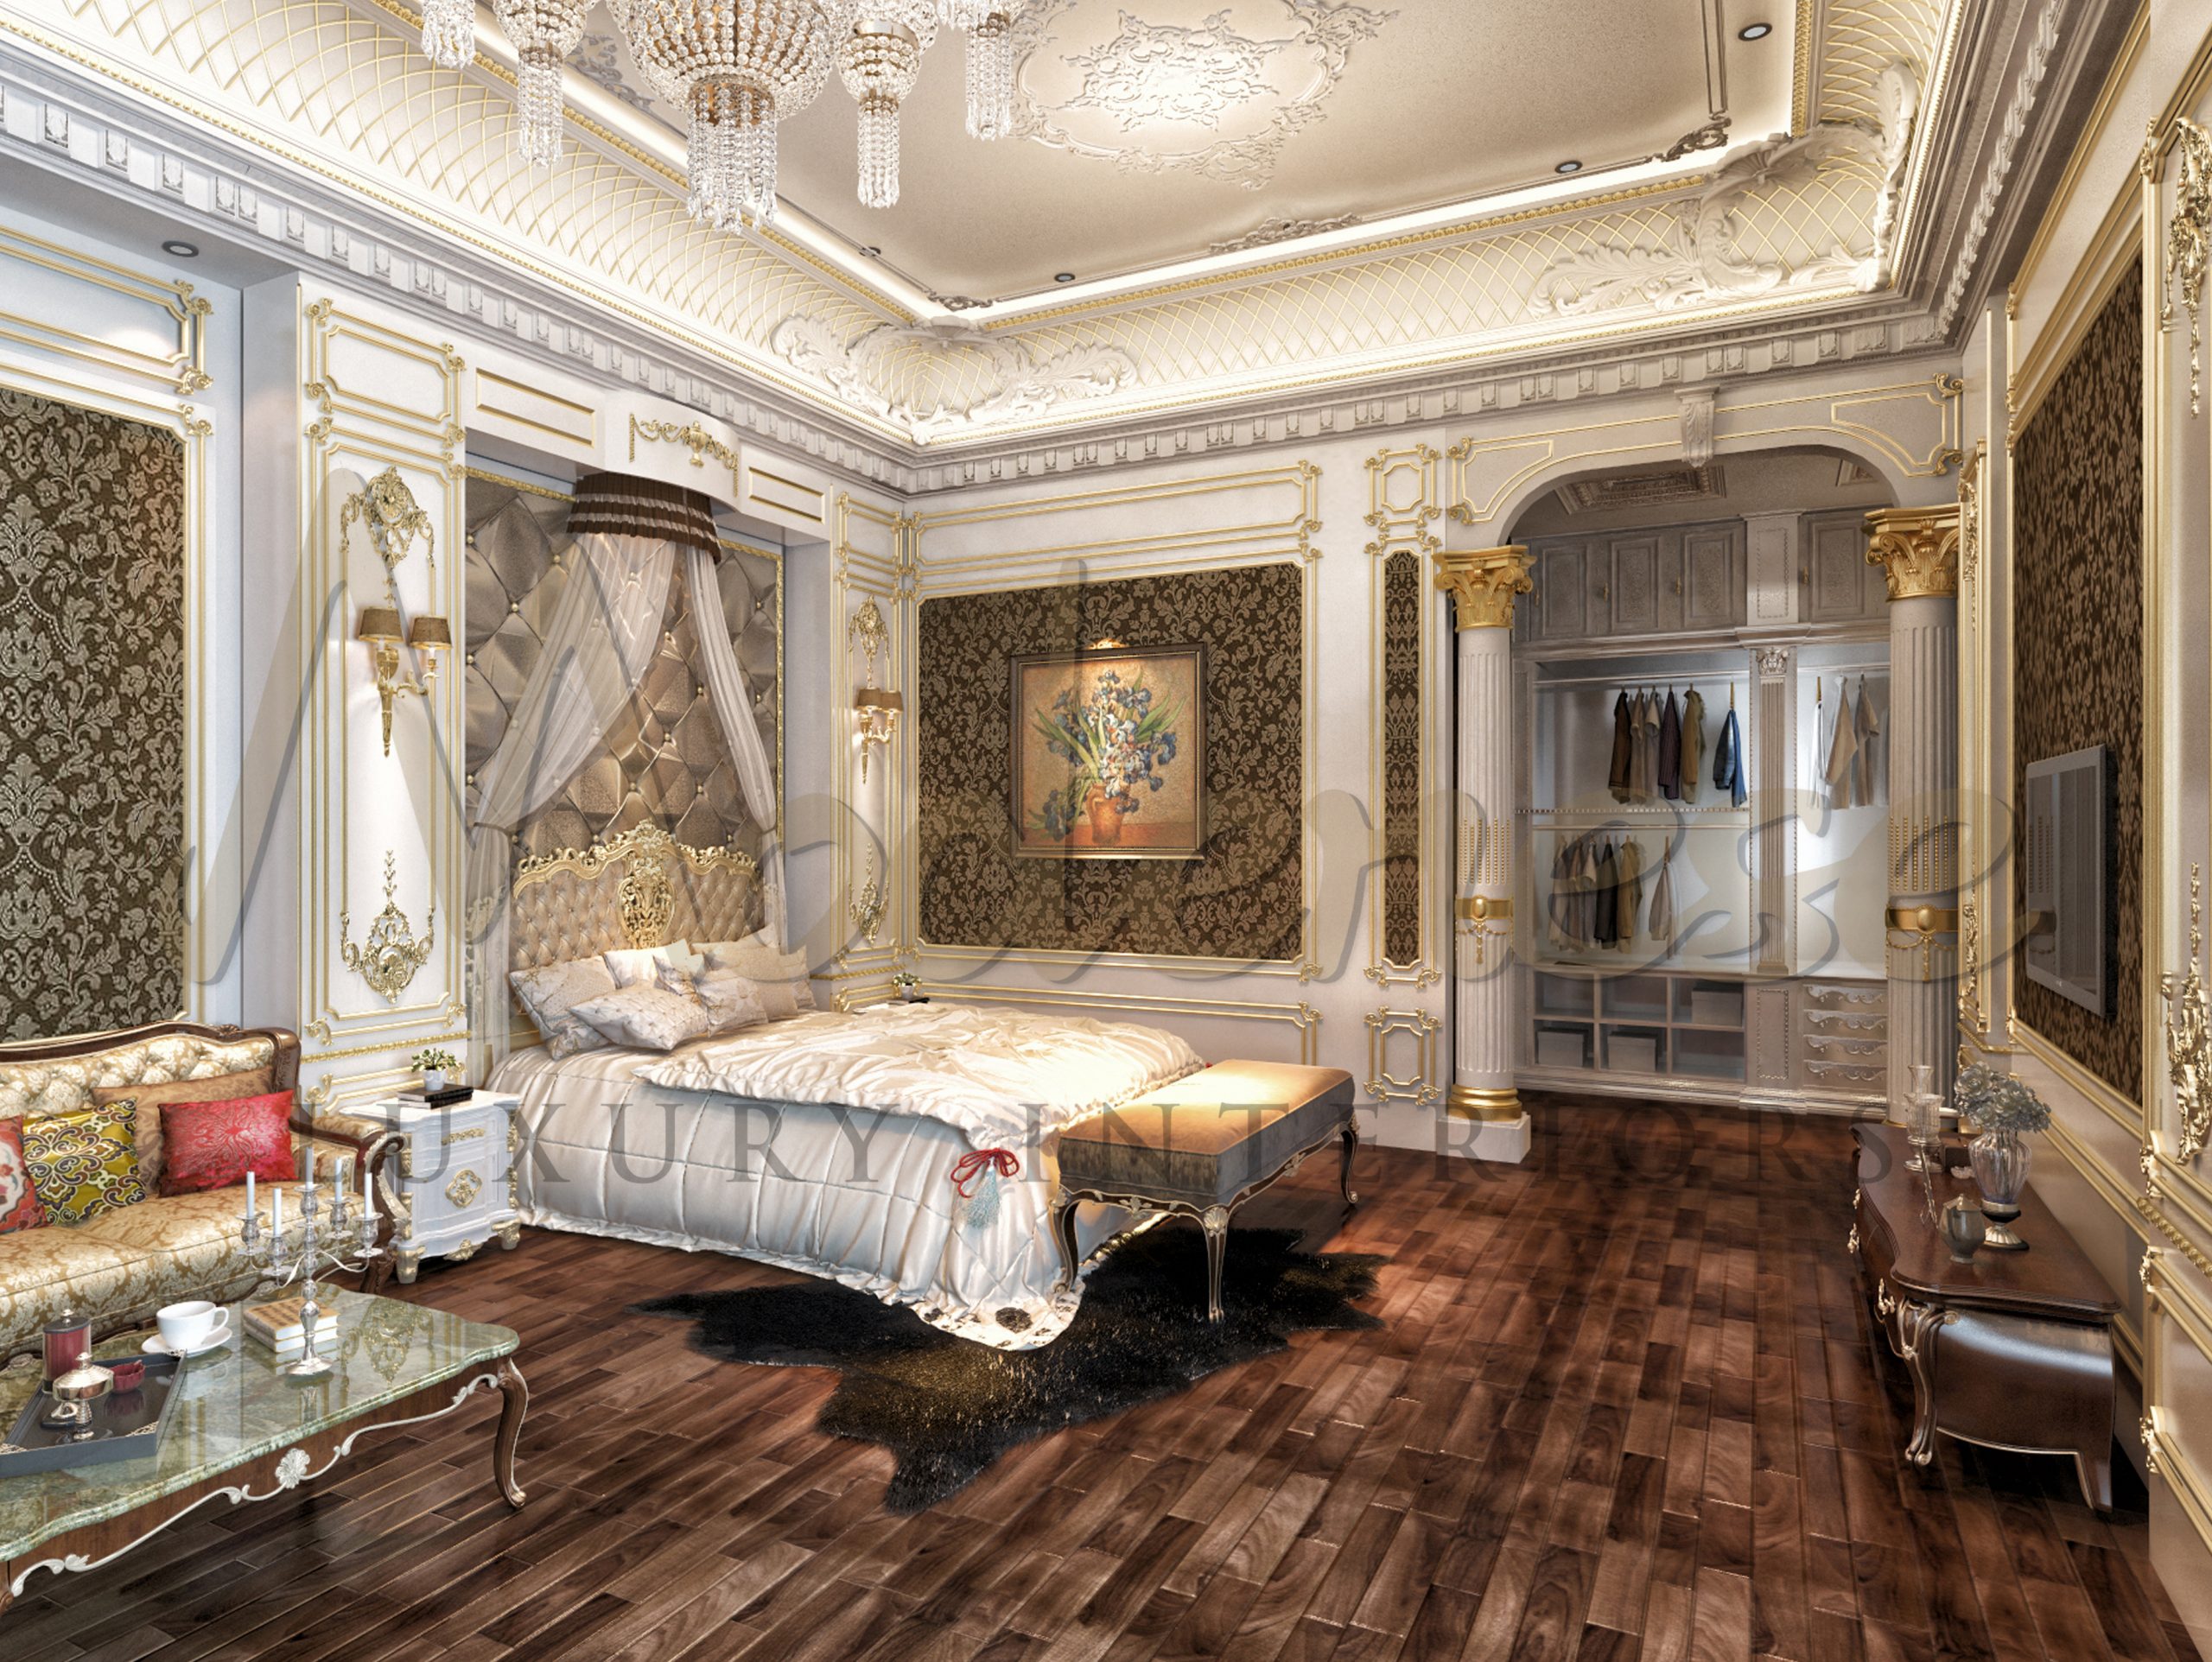 Royal Bedroom Design In Baroque Style In Doha, Qatar